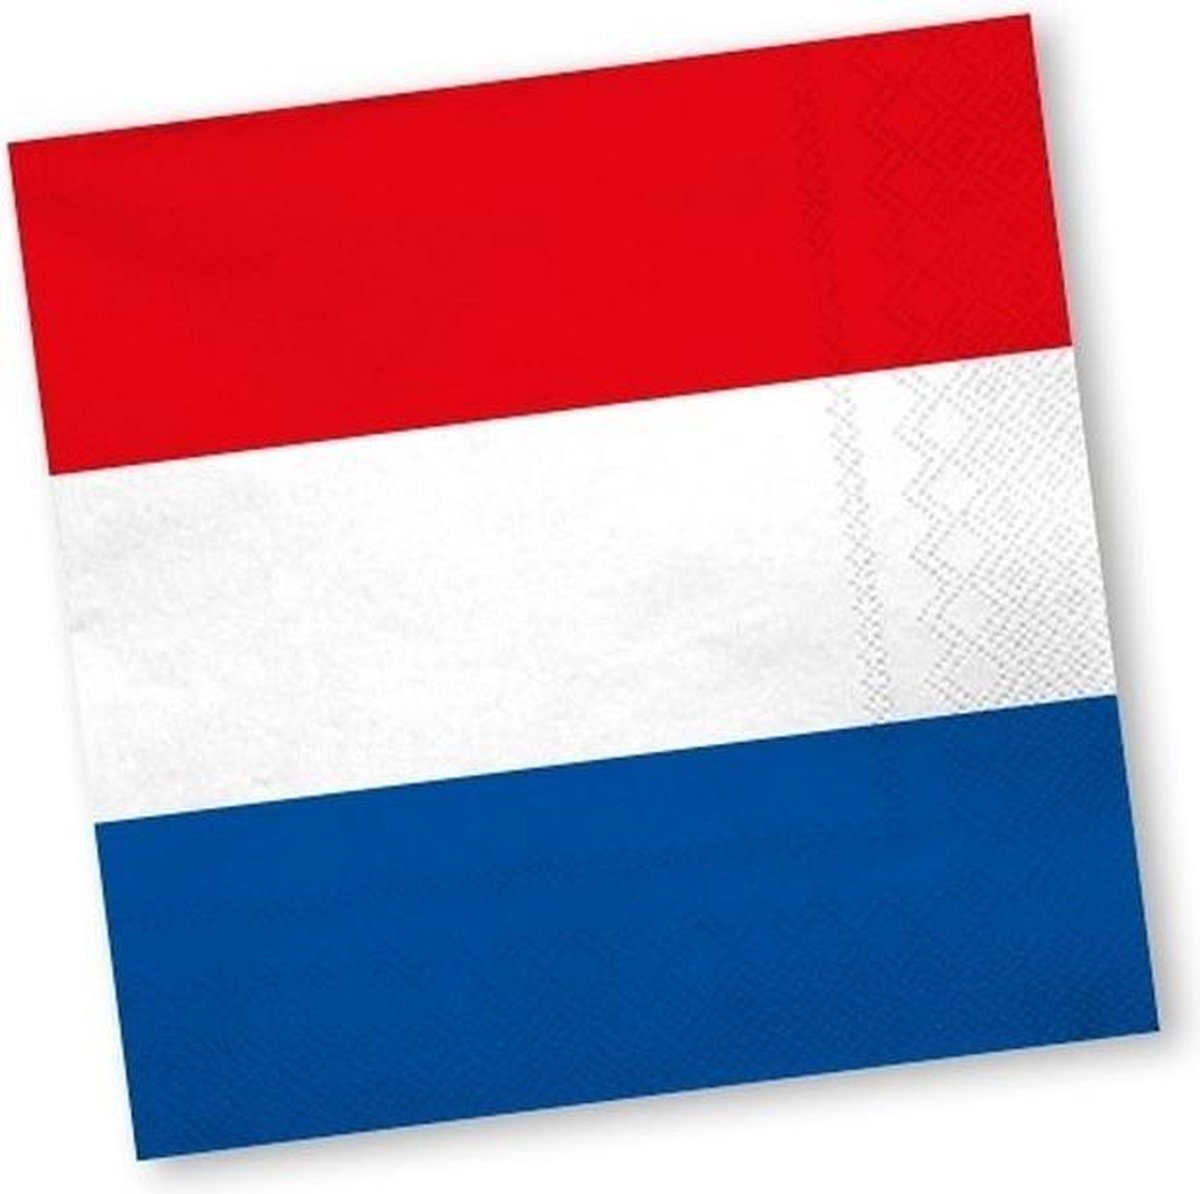 Holland rood wit blauw servetten 40 stuks - Holland/ Koningsdag thema versiering - Merkloos